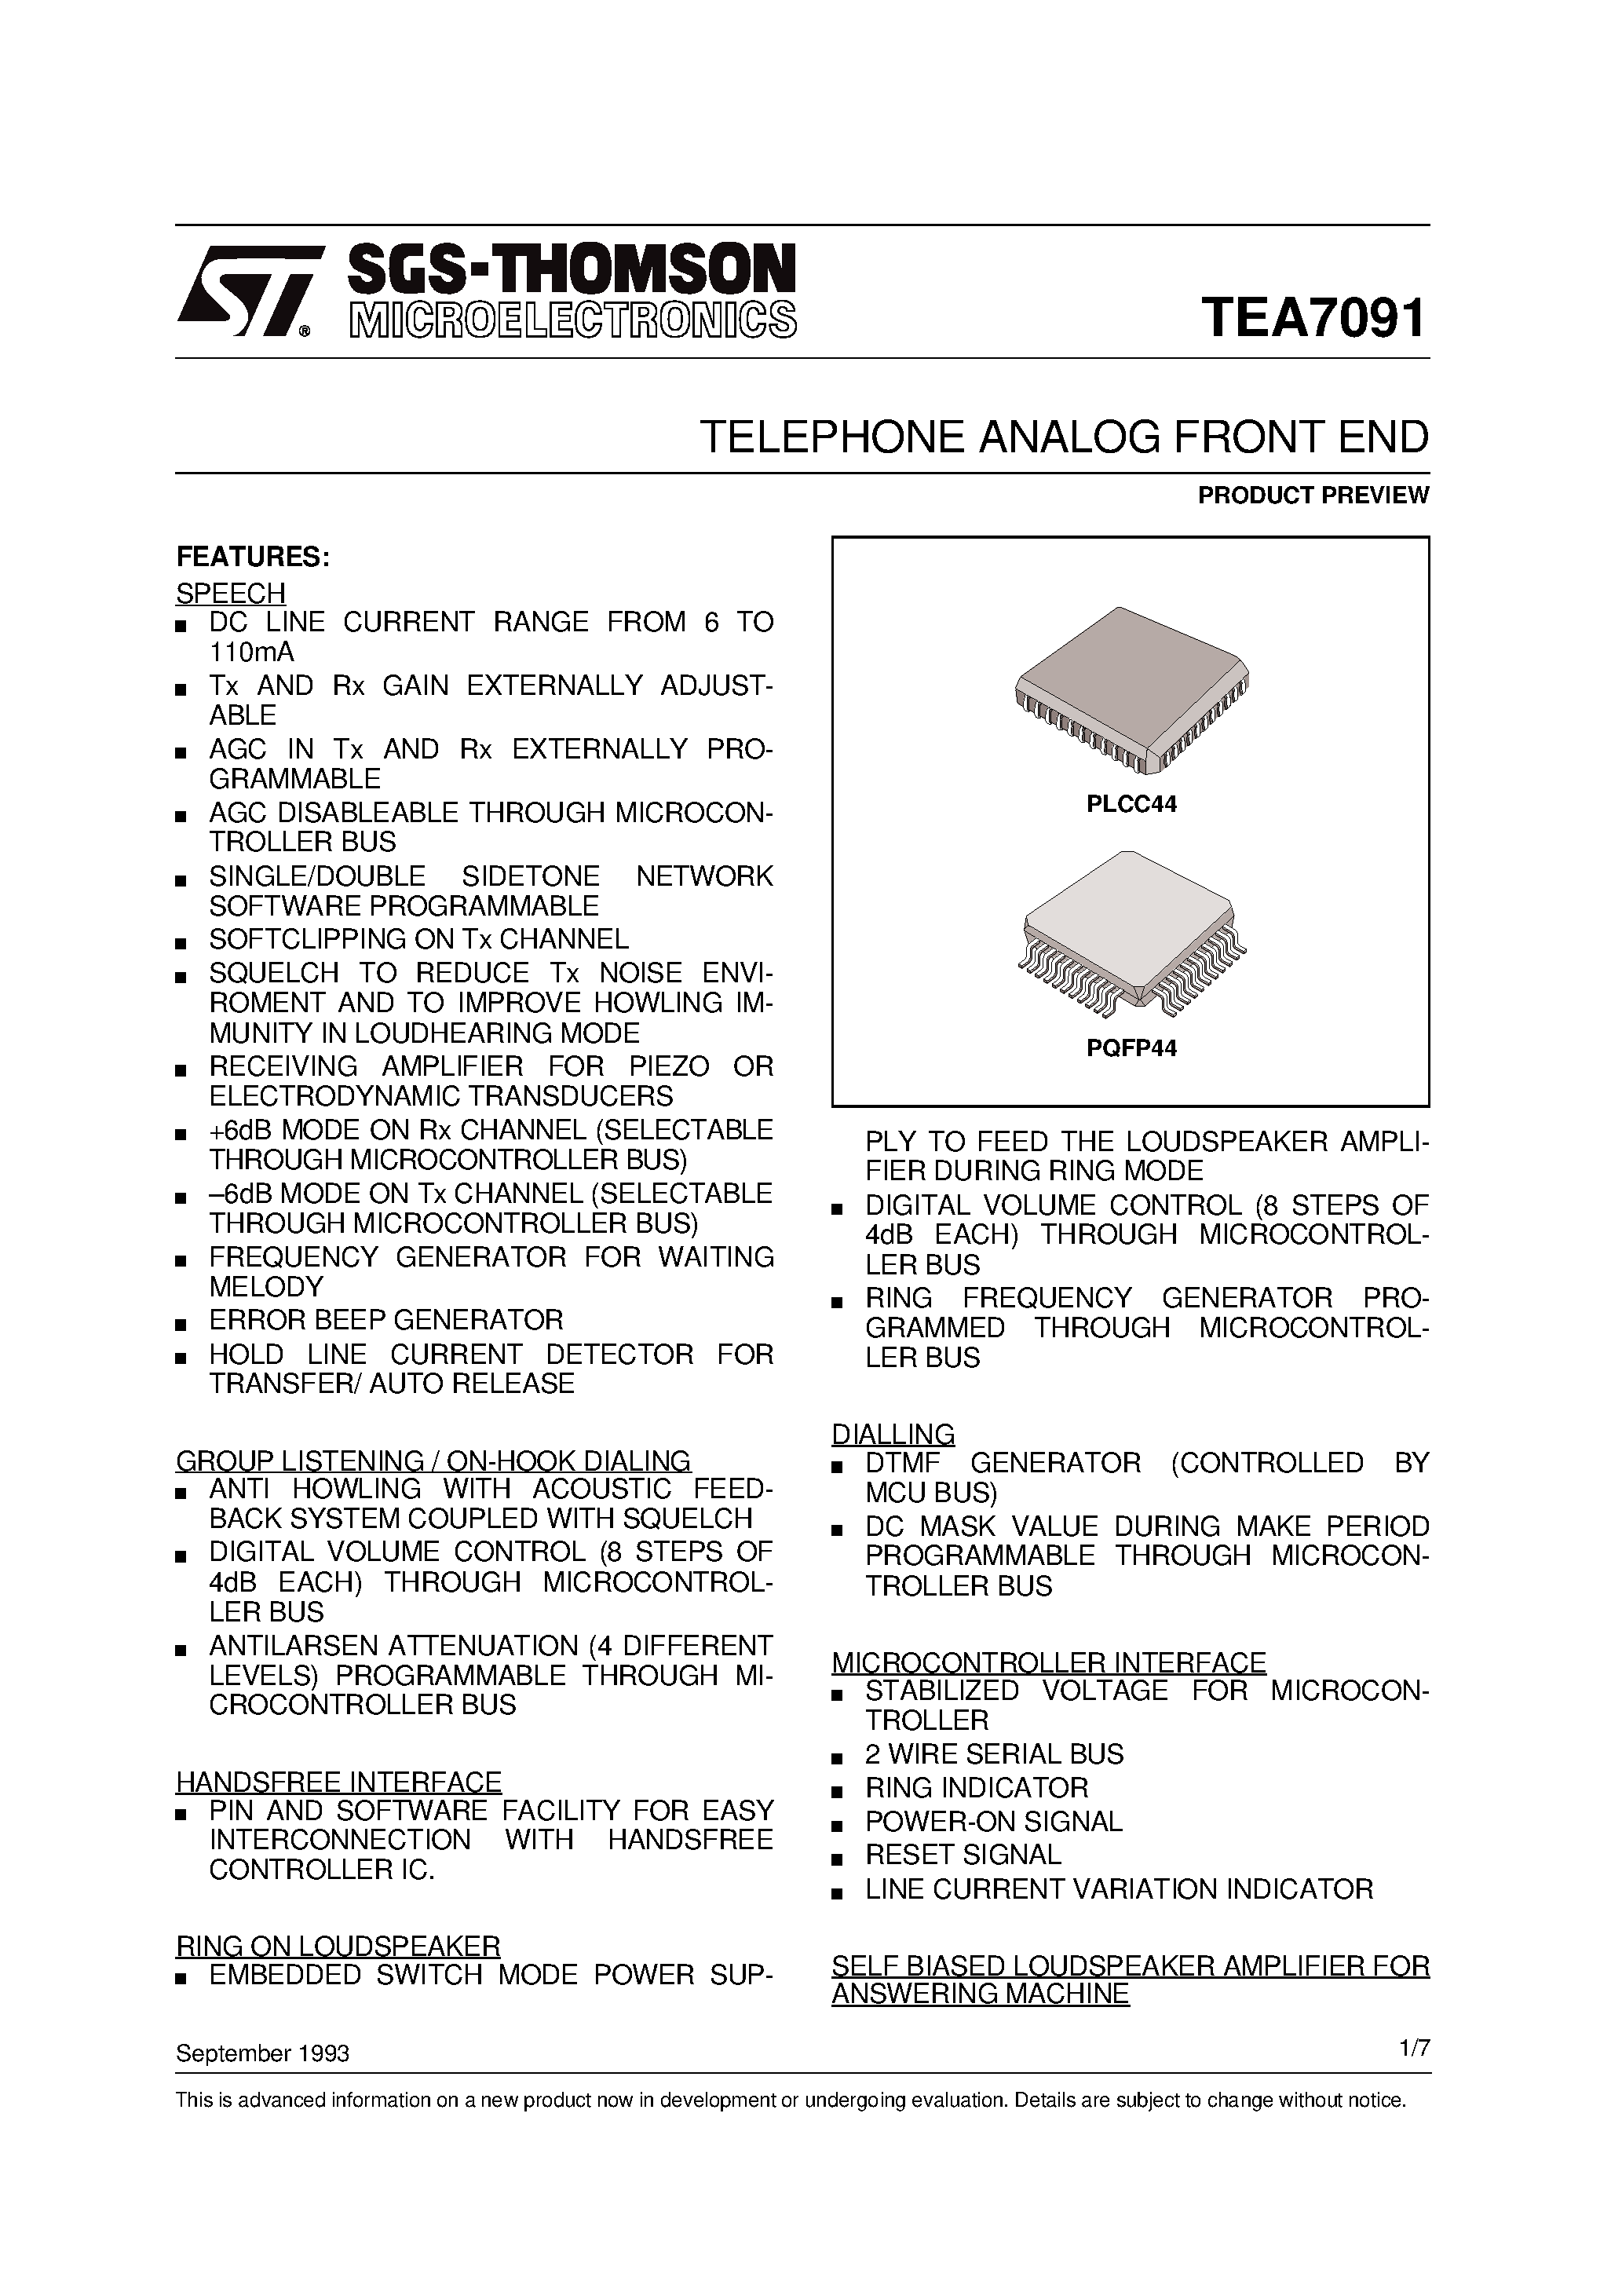 Datasheet TEA7091 - TELEPHONE ANALOG FRONT END page 1